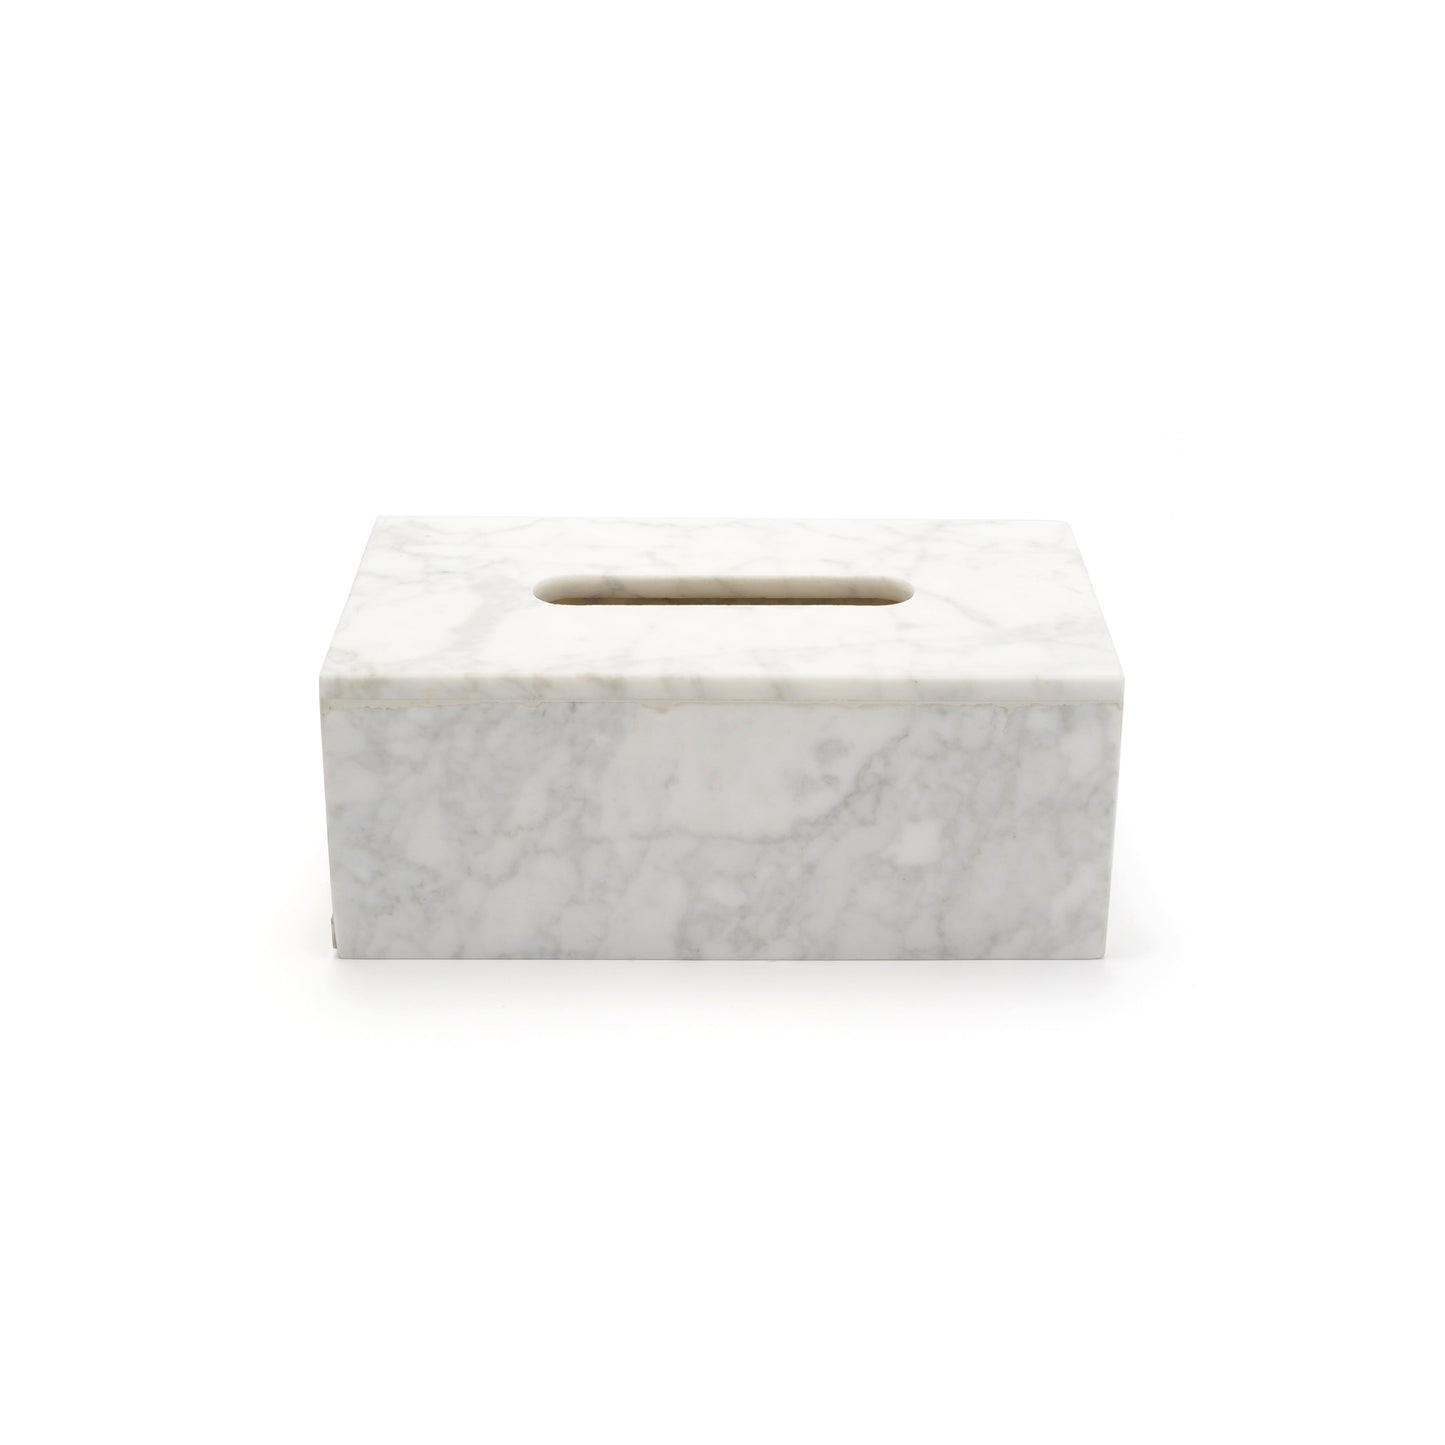 MARBLE TISSUE BOX - White